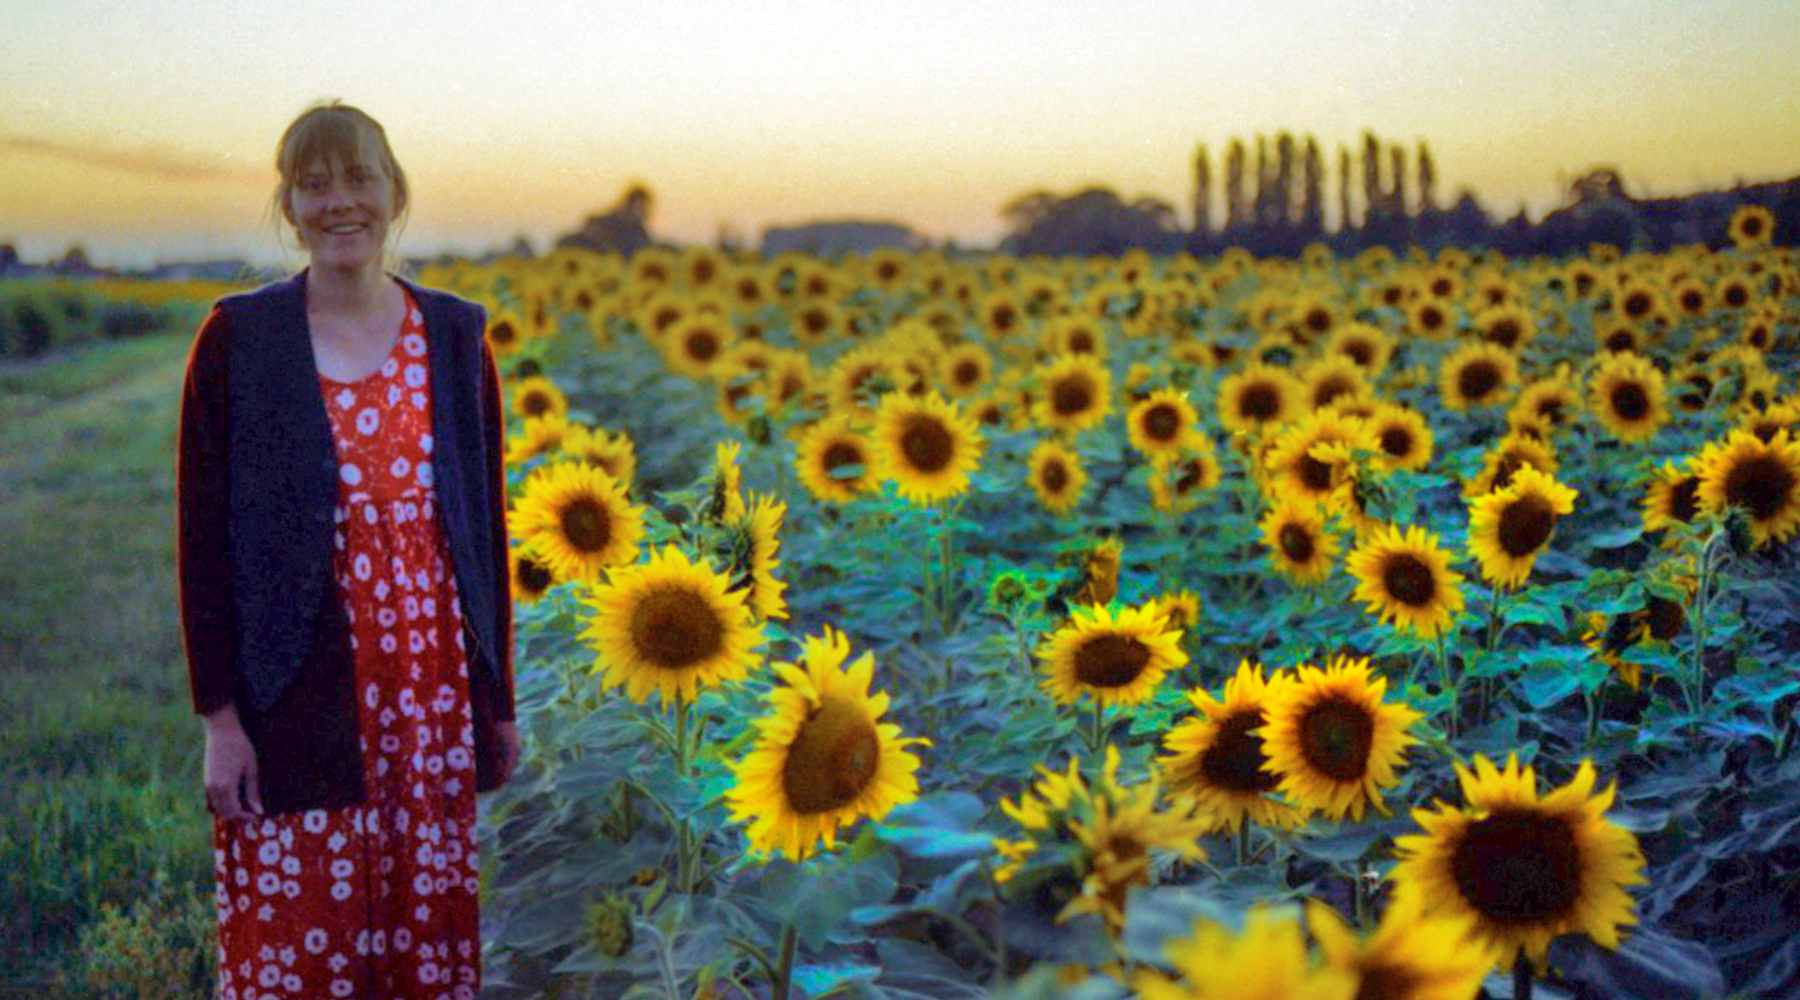 Sunflower Power: How Sunflowers by Van Gogh Changed the Art World